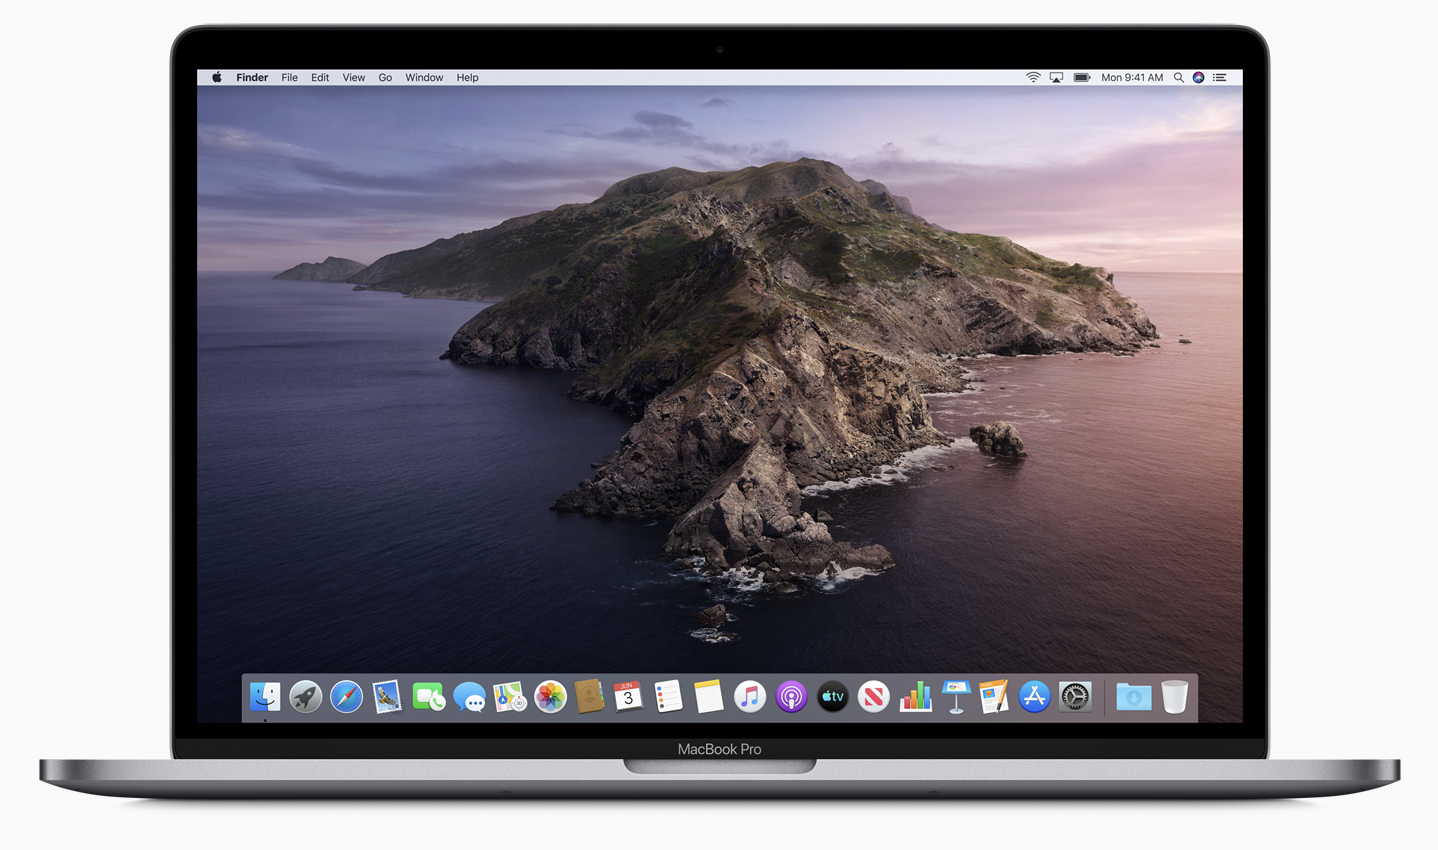 Apple posts first developer beta of macOS 10.15.2